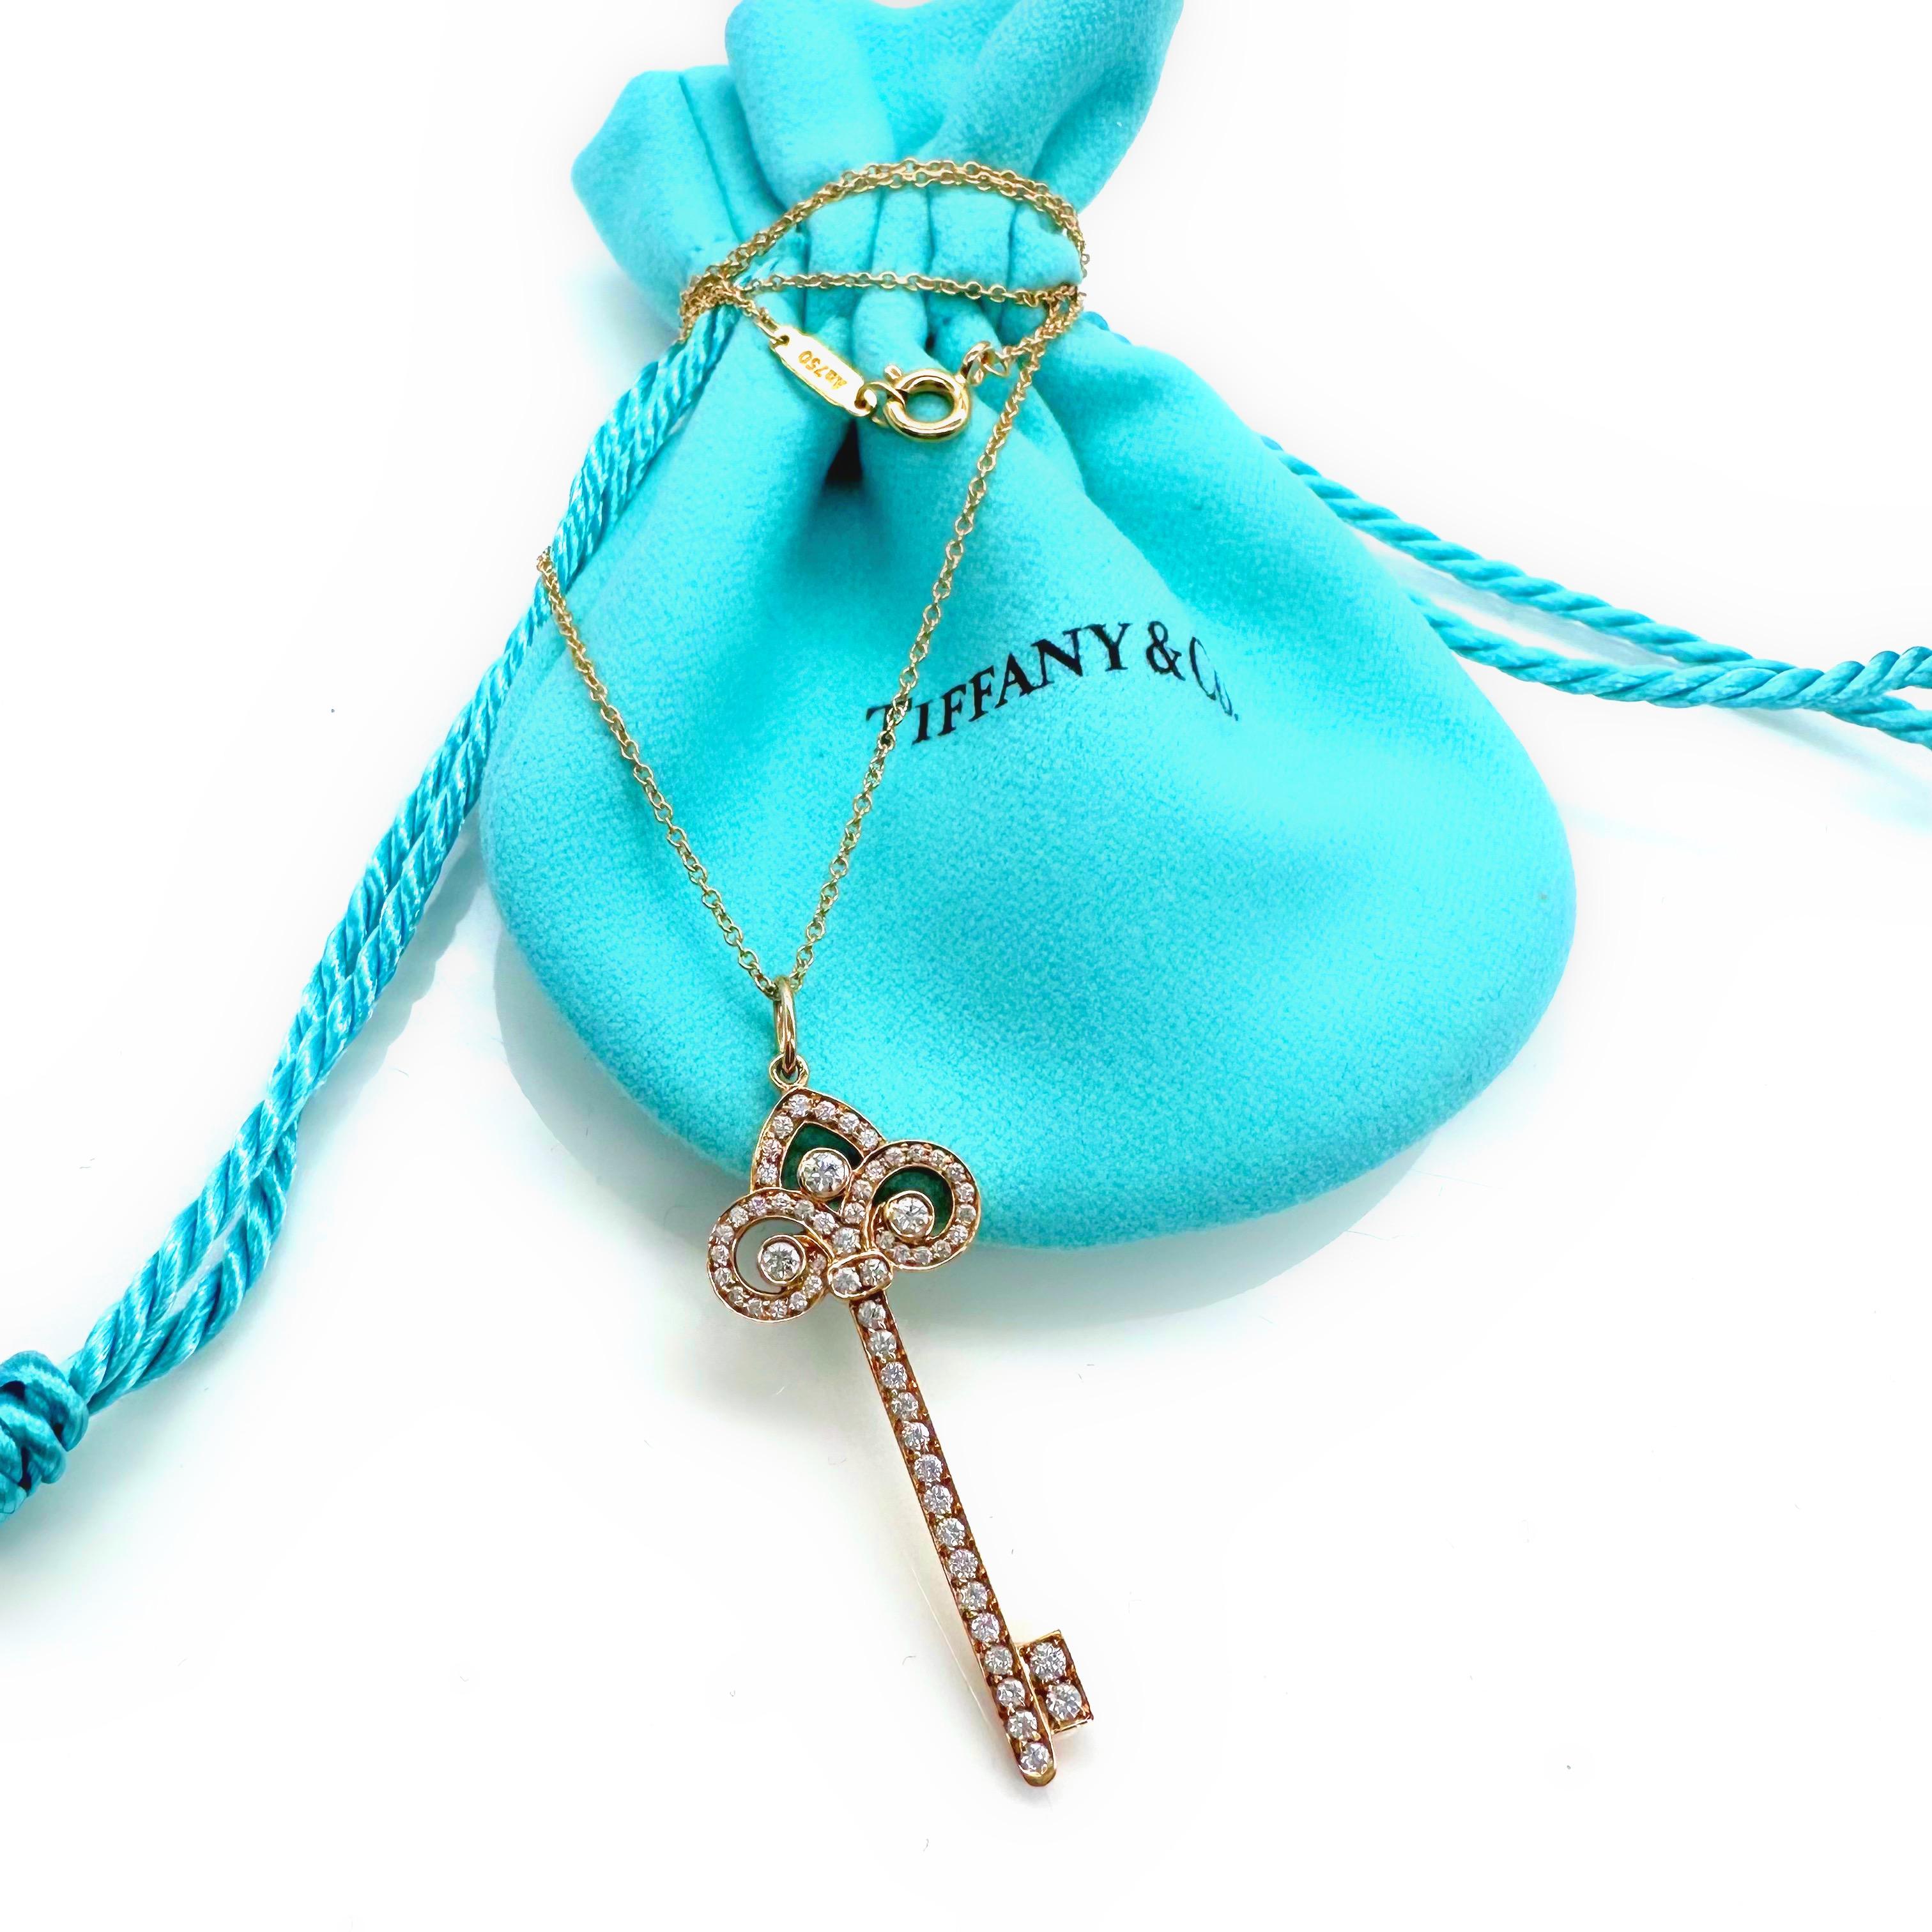 Tiffany & Co Fleur de Lis Diamond Key Pendant withChain 
Style:  Pendant Necklace
Ref. number:  GRP08993
Metal:  18kt Rose Gold
Size / Measurements:  Pendant 1.5' Inches / Chain 18' Inches
TCW:  0.40 tcw
Main Diamond:  60 Round Brilliant